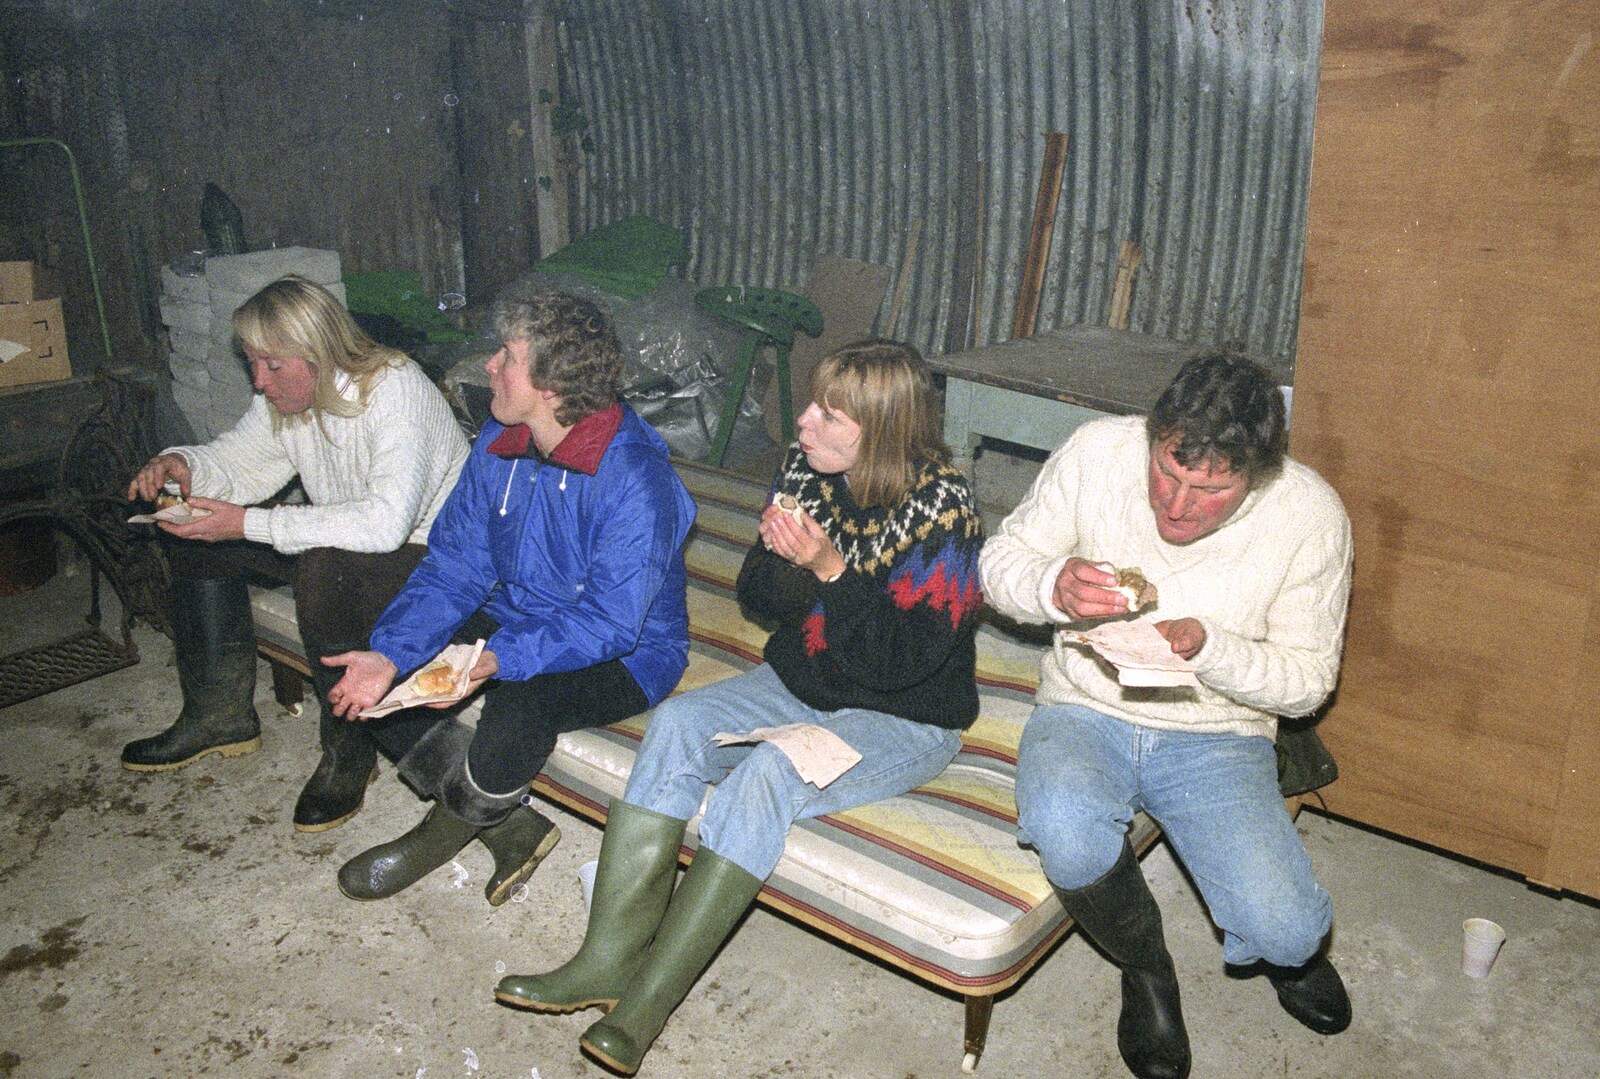 The gang in the Nissen hut from Bonfire Night, Stuston, Suffolk - 5th November 1990